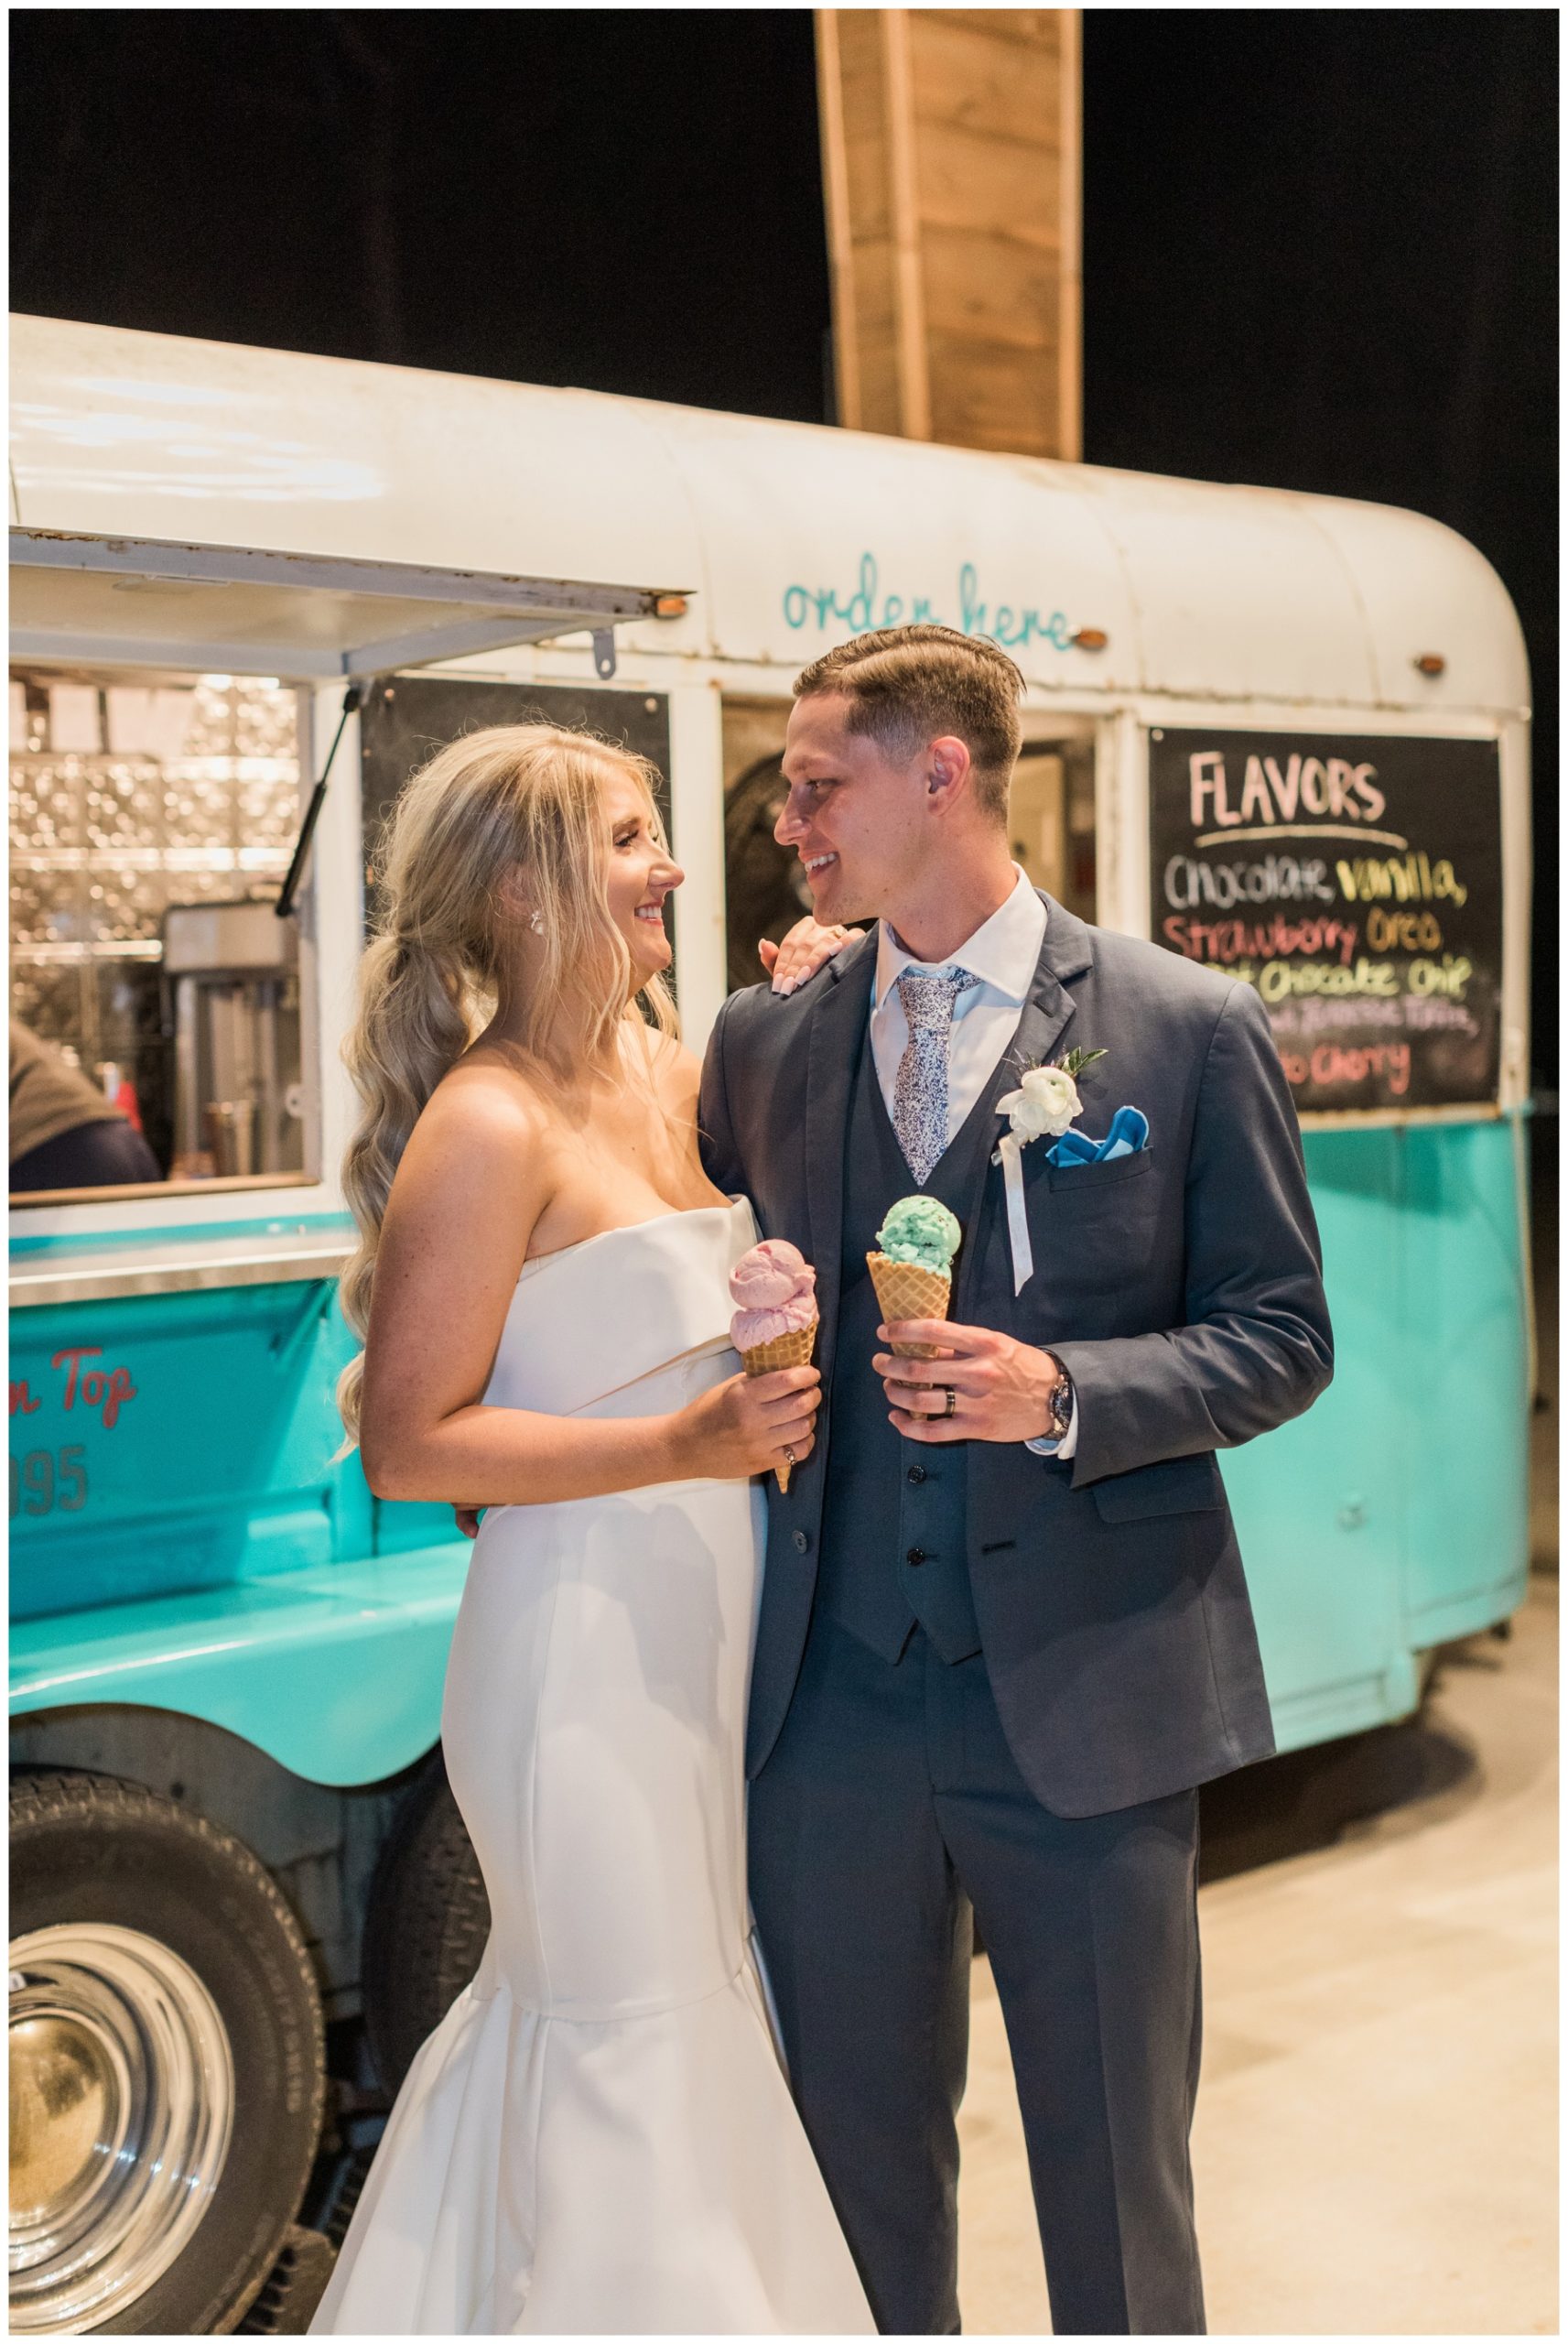 Ice cream truck at wedding